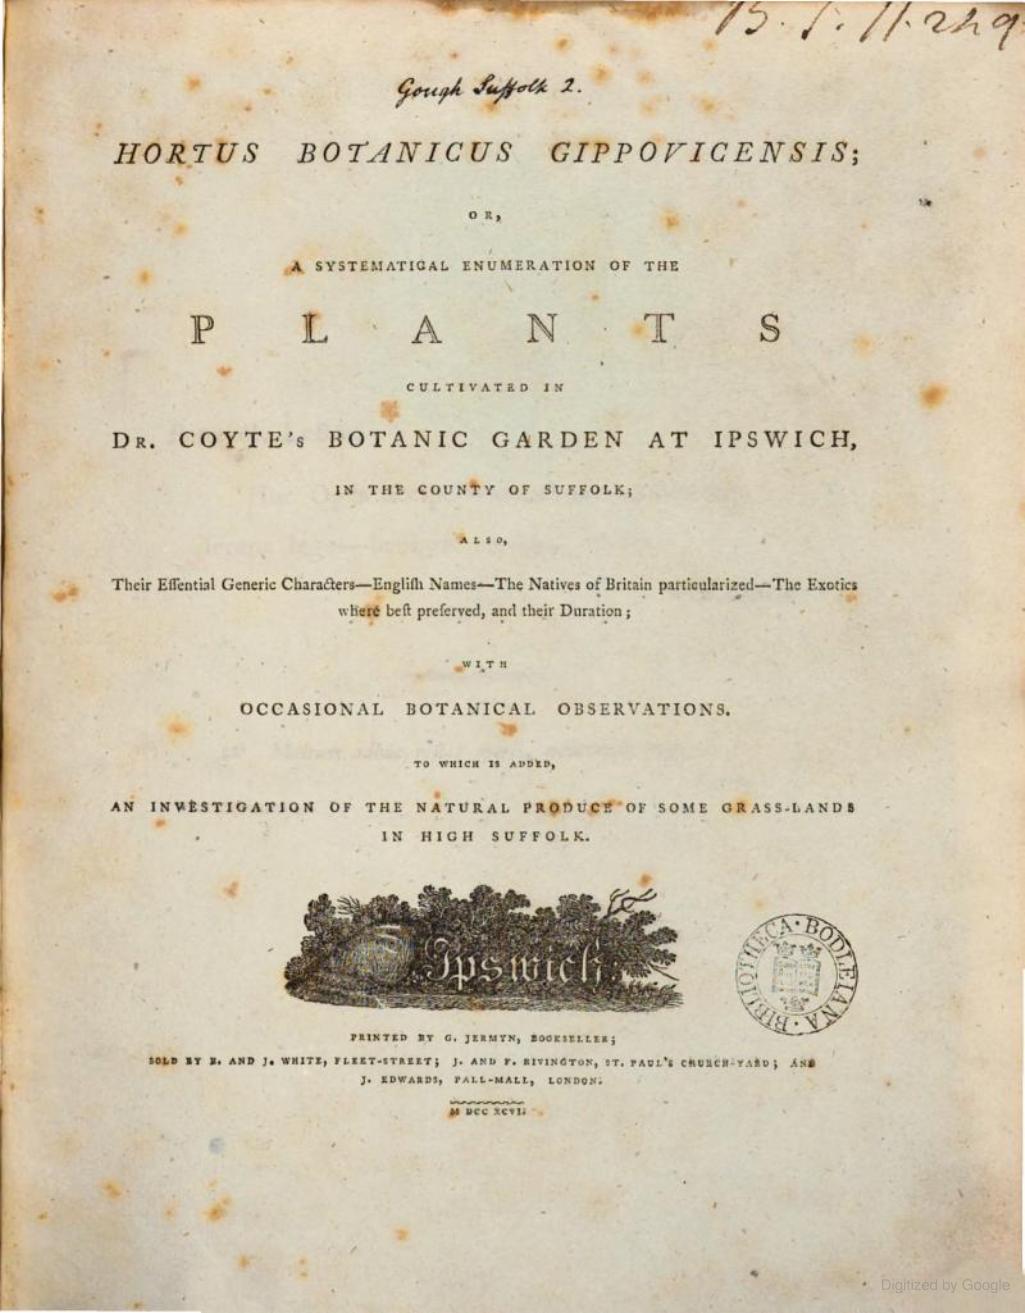 Hortus Botanicus Gippovicensis cover